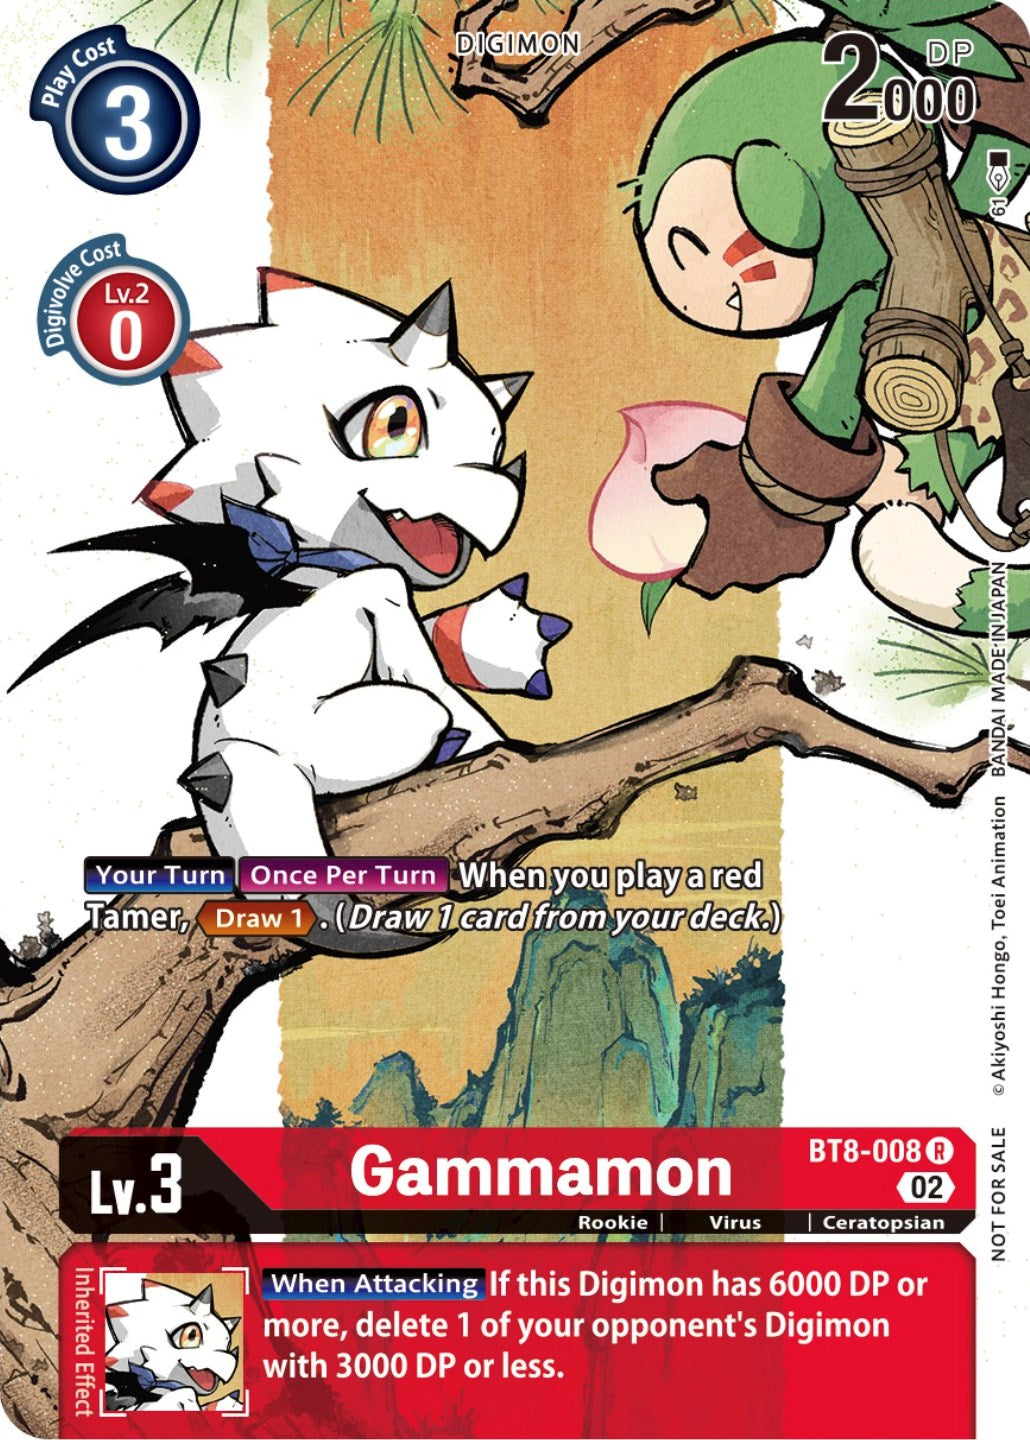 Gammamon [BT8-008] (Digimon Illustration Competition Promotion Pack) [New Awakening Promos] | Event Horizon Hobbies CA